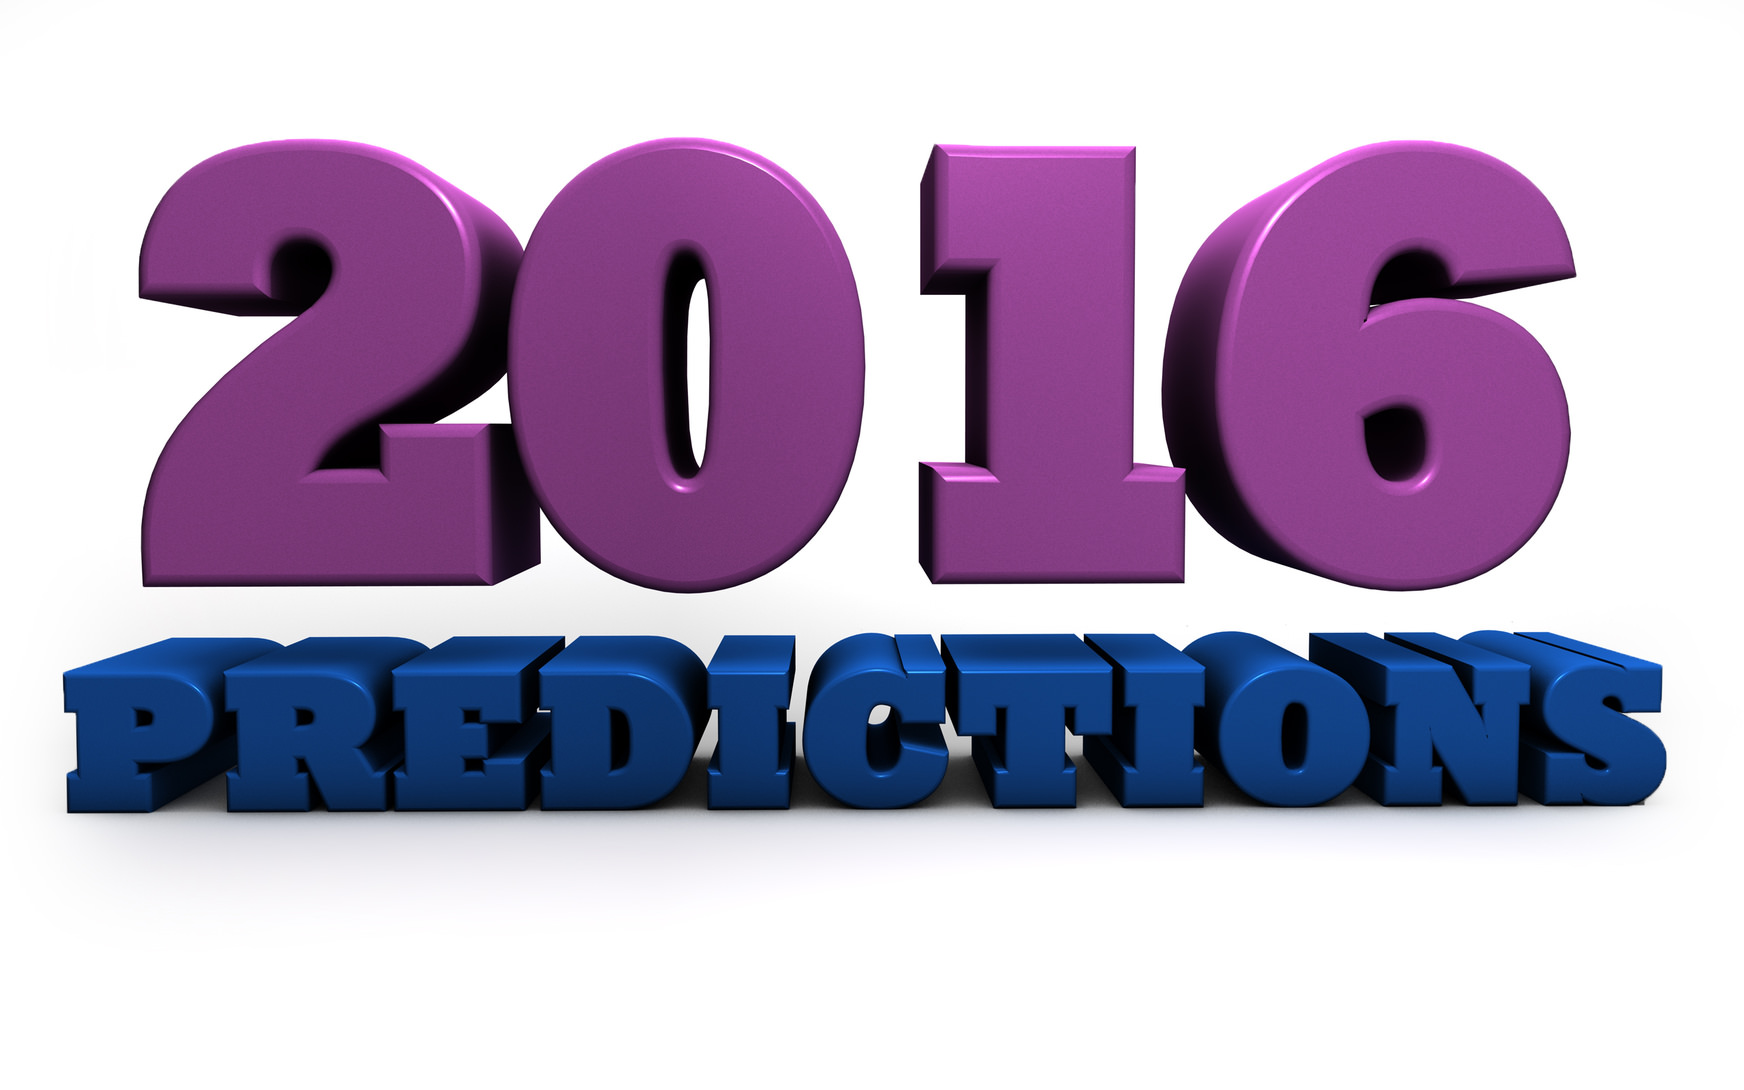 Fairly Confident Predictions for 2016